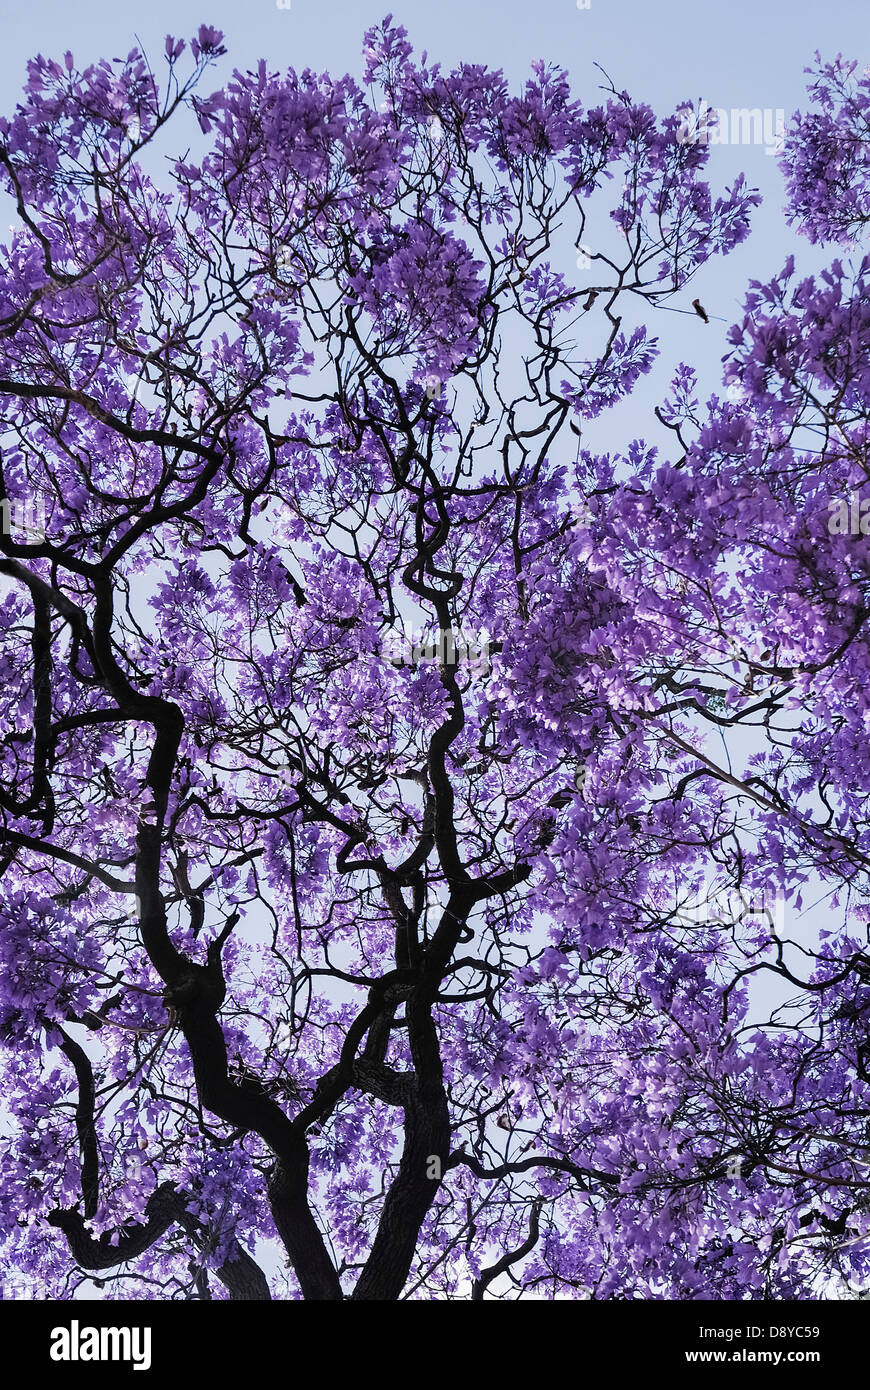 Portugal, Estremadura, Lisbon, Detail of Jacaranda tree, Dalbergia nigra, with purple flower blossom against a blue sky. Stock Photo